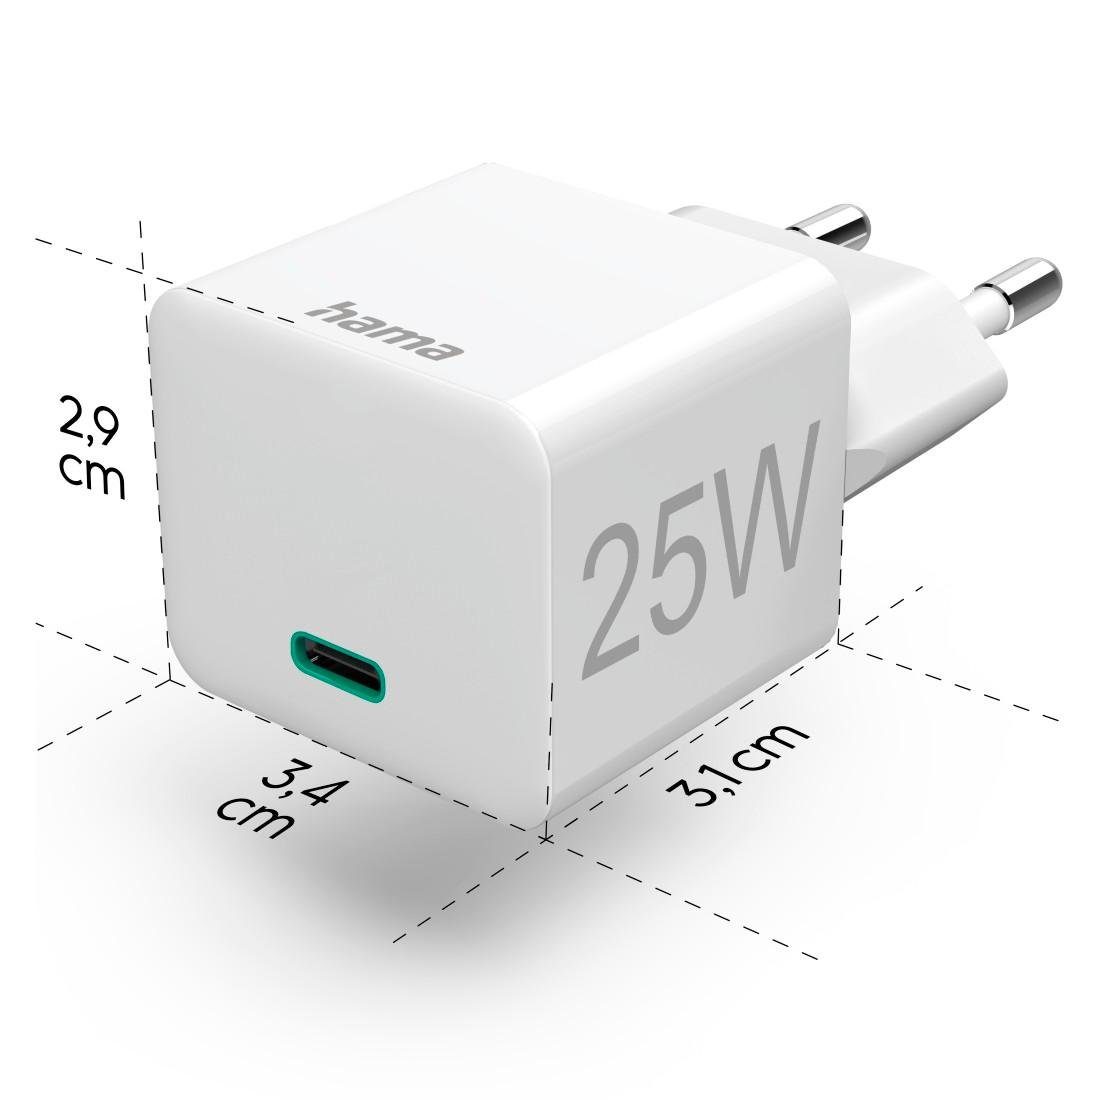 USB-Ladegerät mit 20 Quick Watt, Ladegerät Hama Delivery weiß Schnellladegerät u. Charge Power